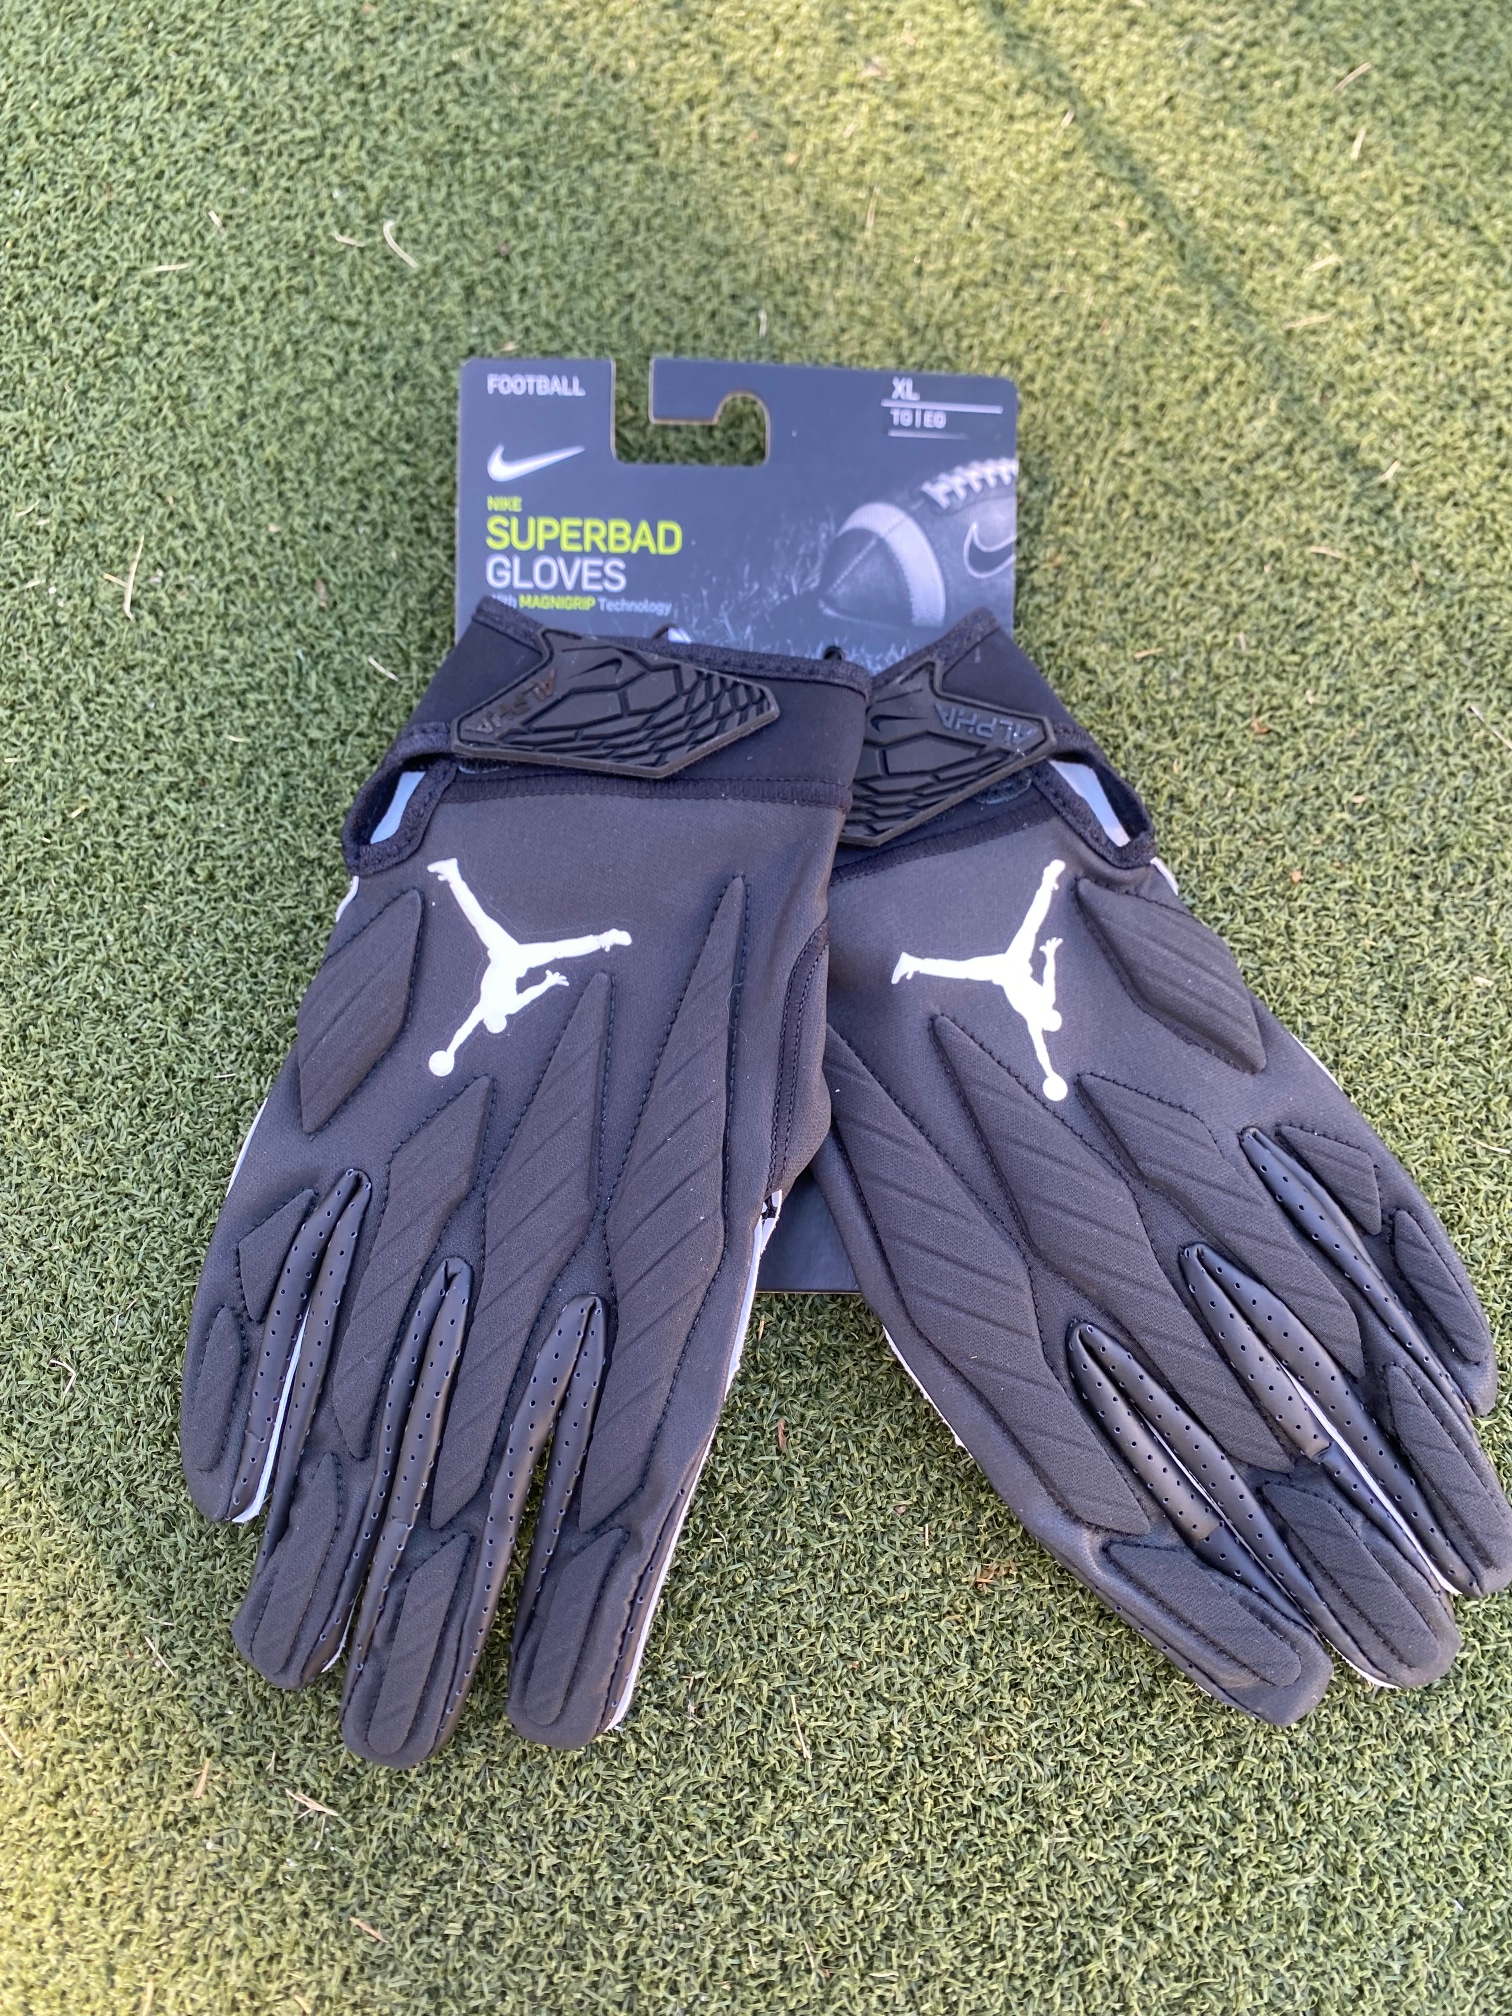 Black New Adult XL Jordan Superbad 5.0 Gloves